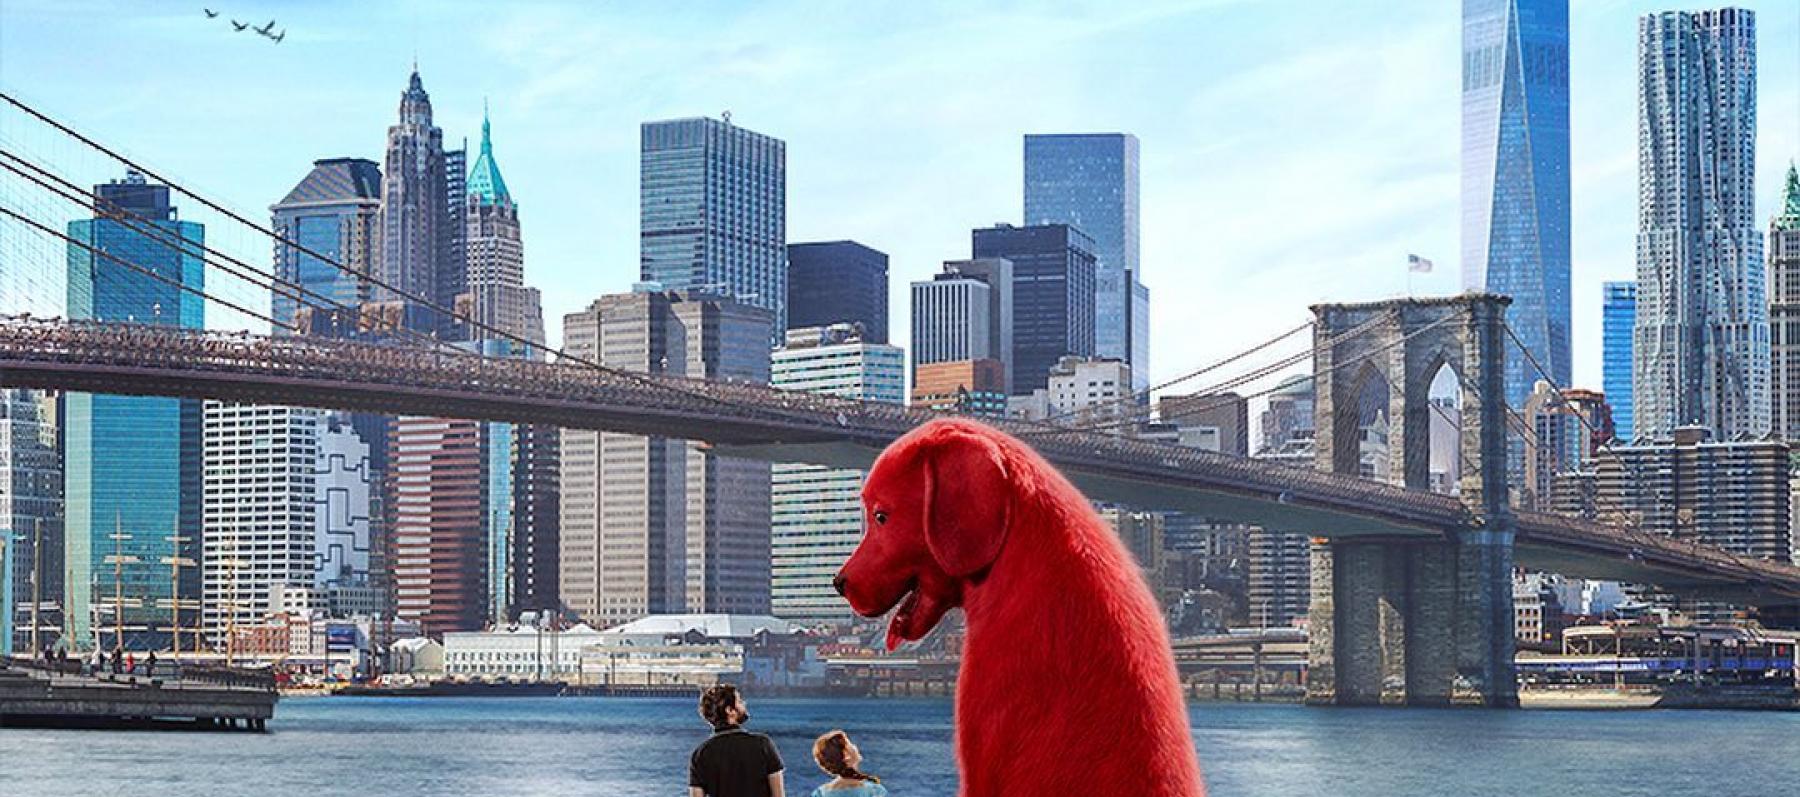 بوستر فيلم Clifford the Big Red Dog- انستغرام @cliffordmovie